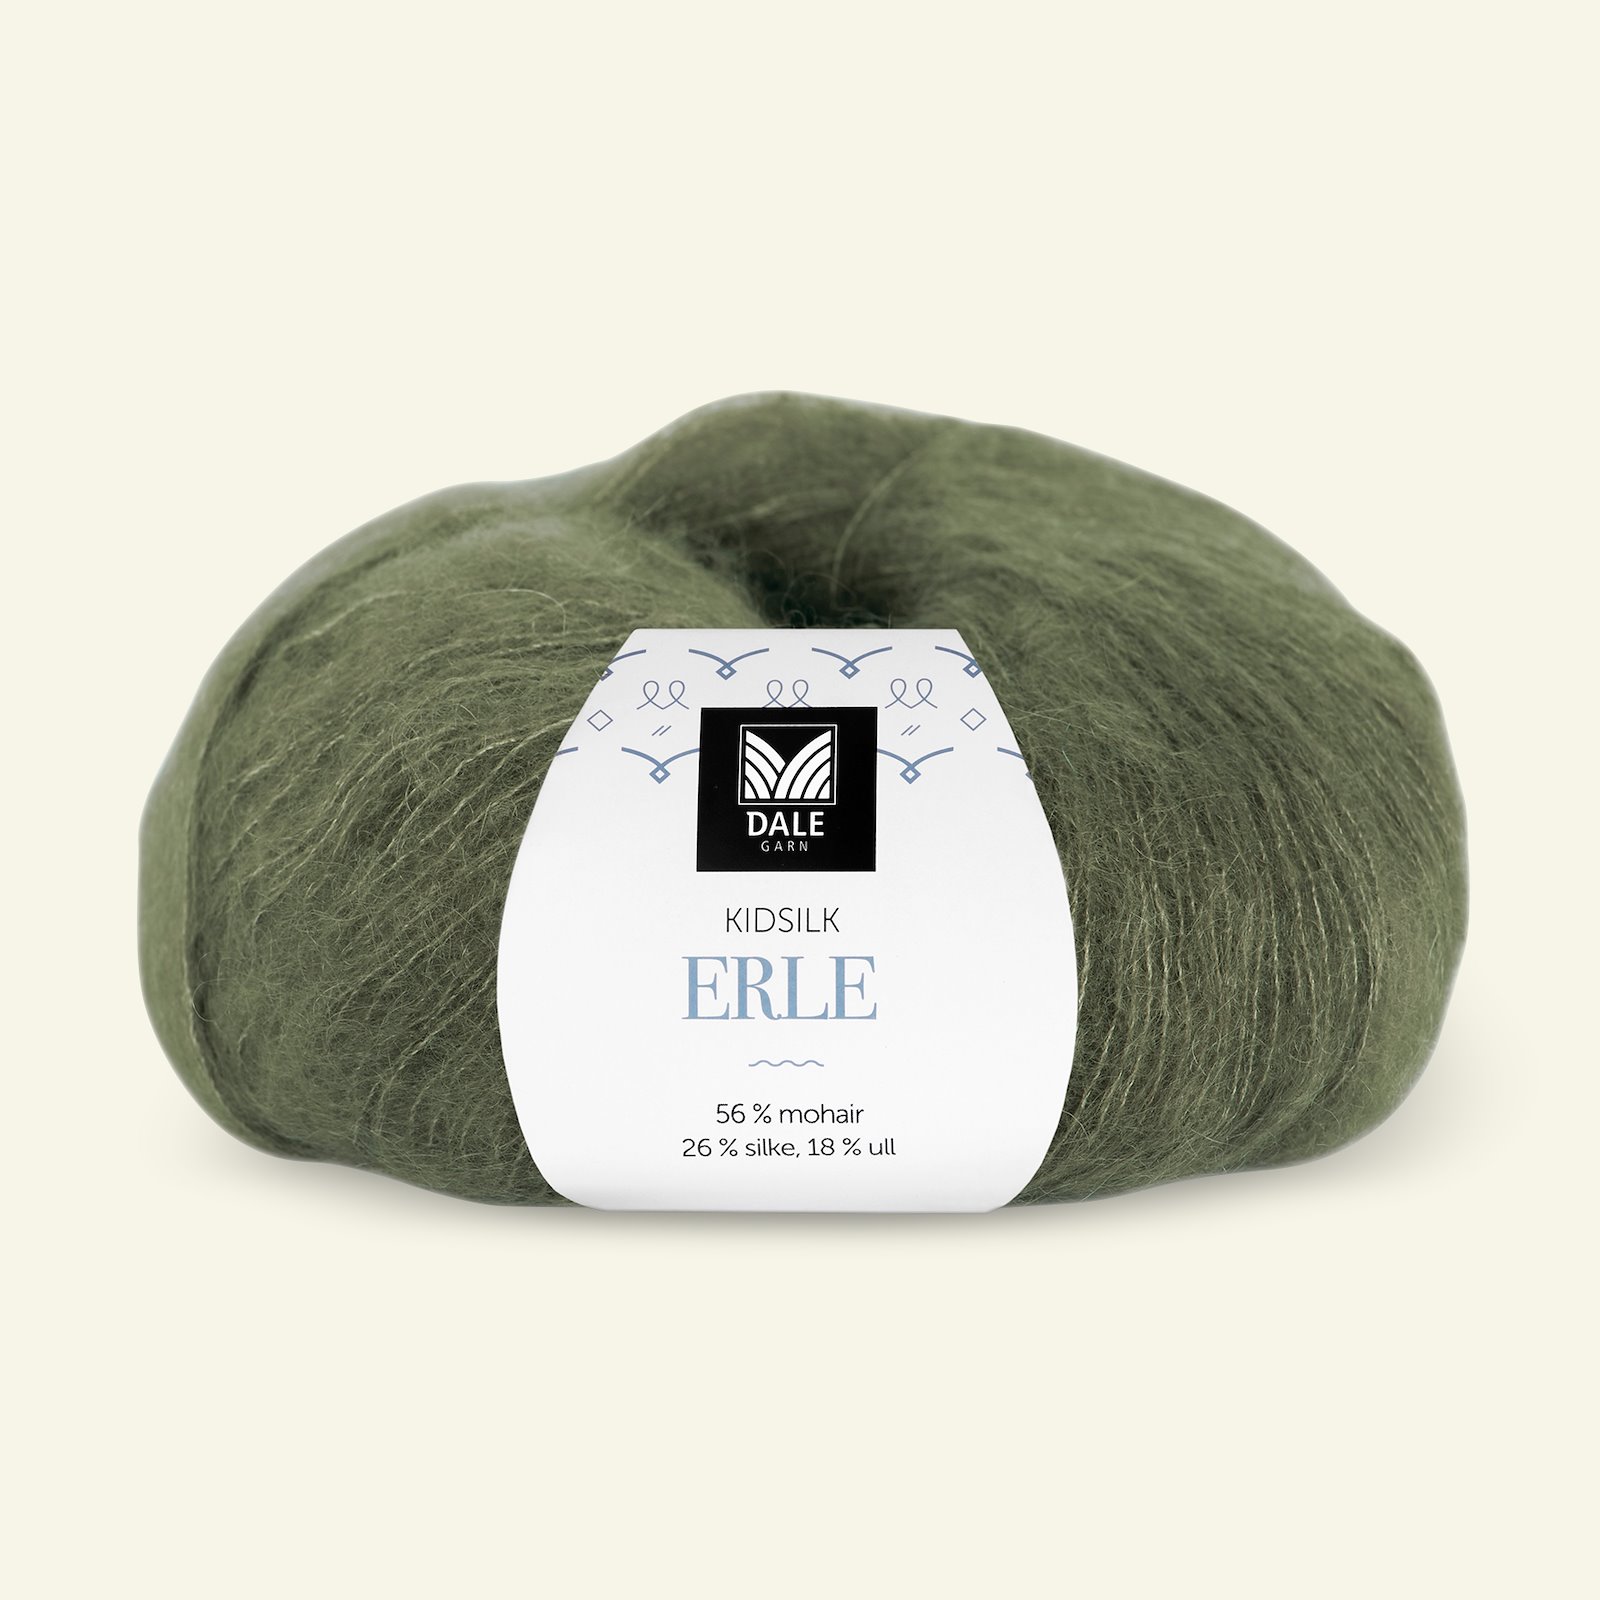 Dale Garn, silk mohair wool yarn "Kidsilk Erle", army green (9054) 90000792_pack